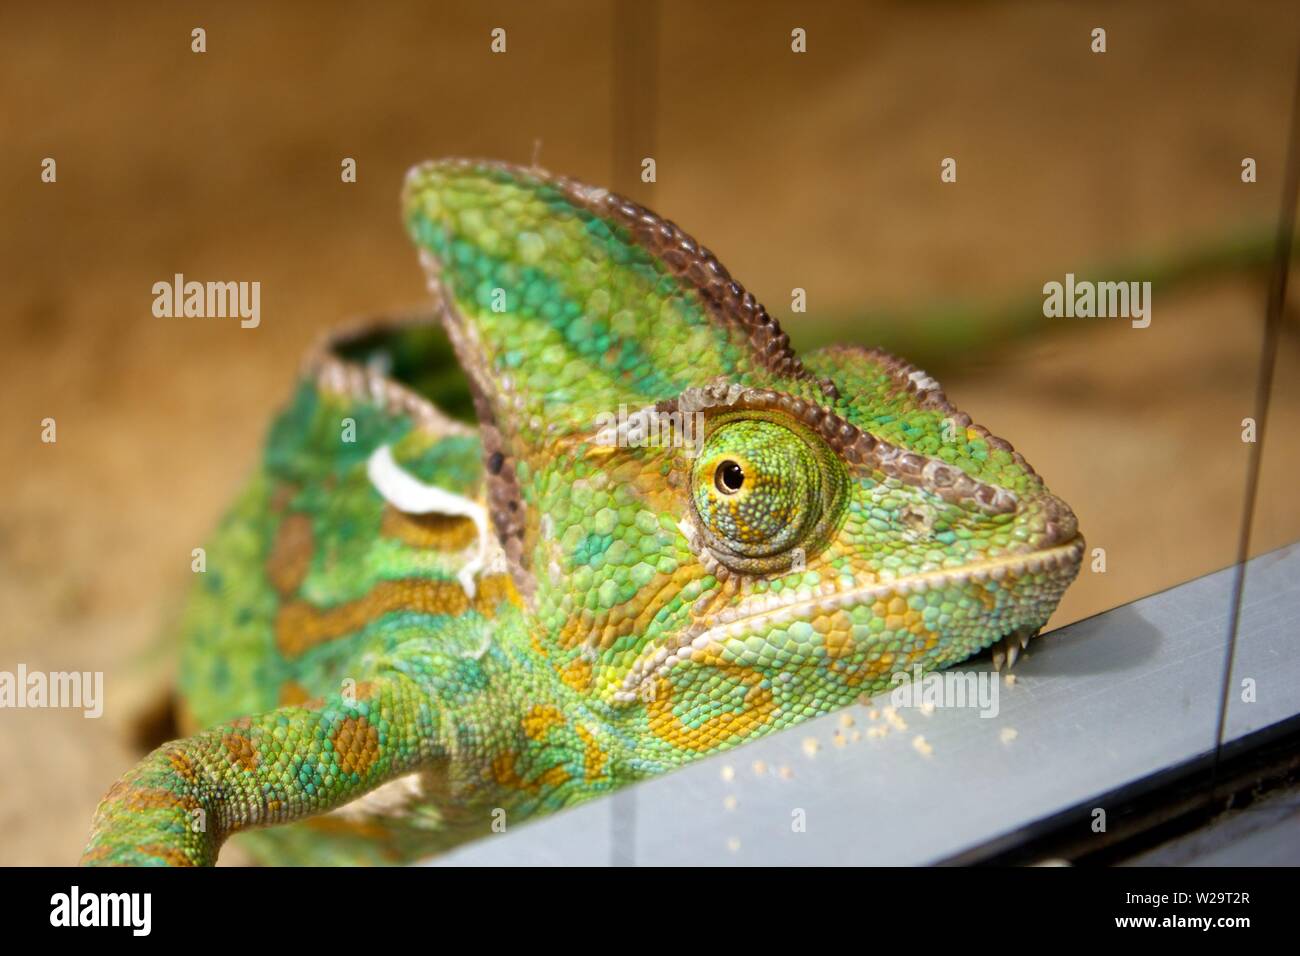 Yemen Chameleon in a terrarium Stock Photo